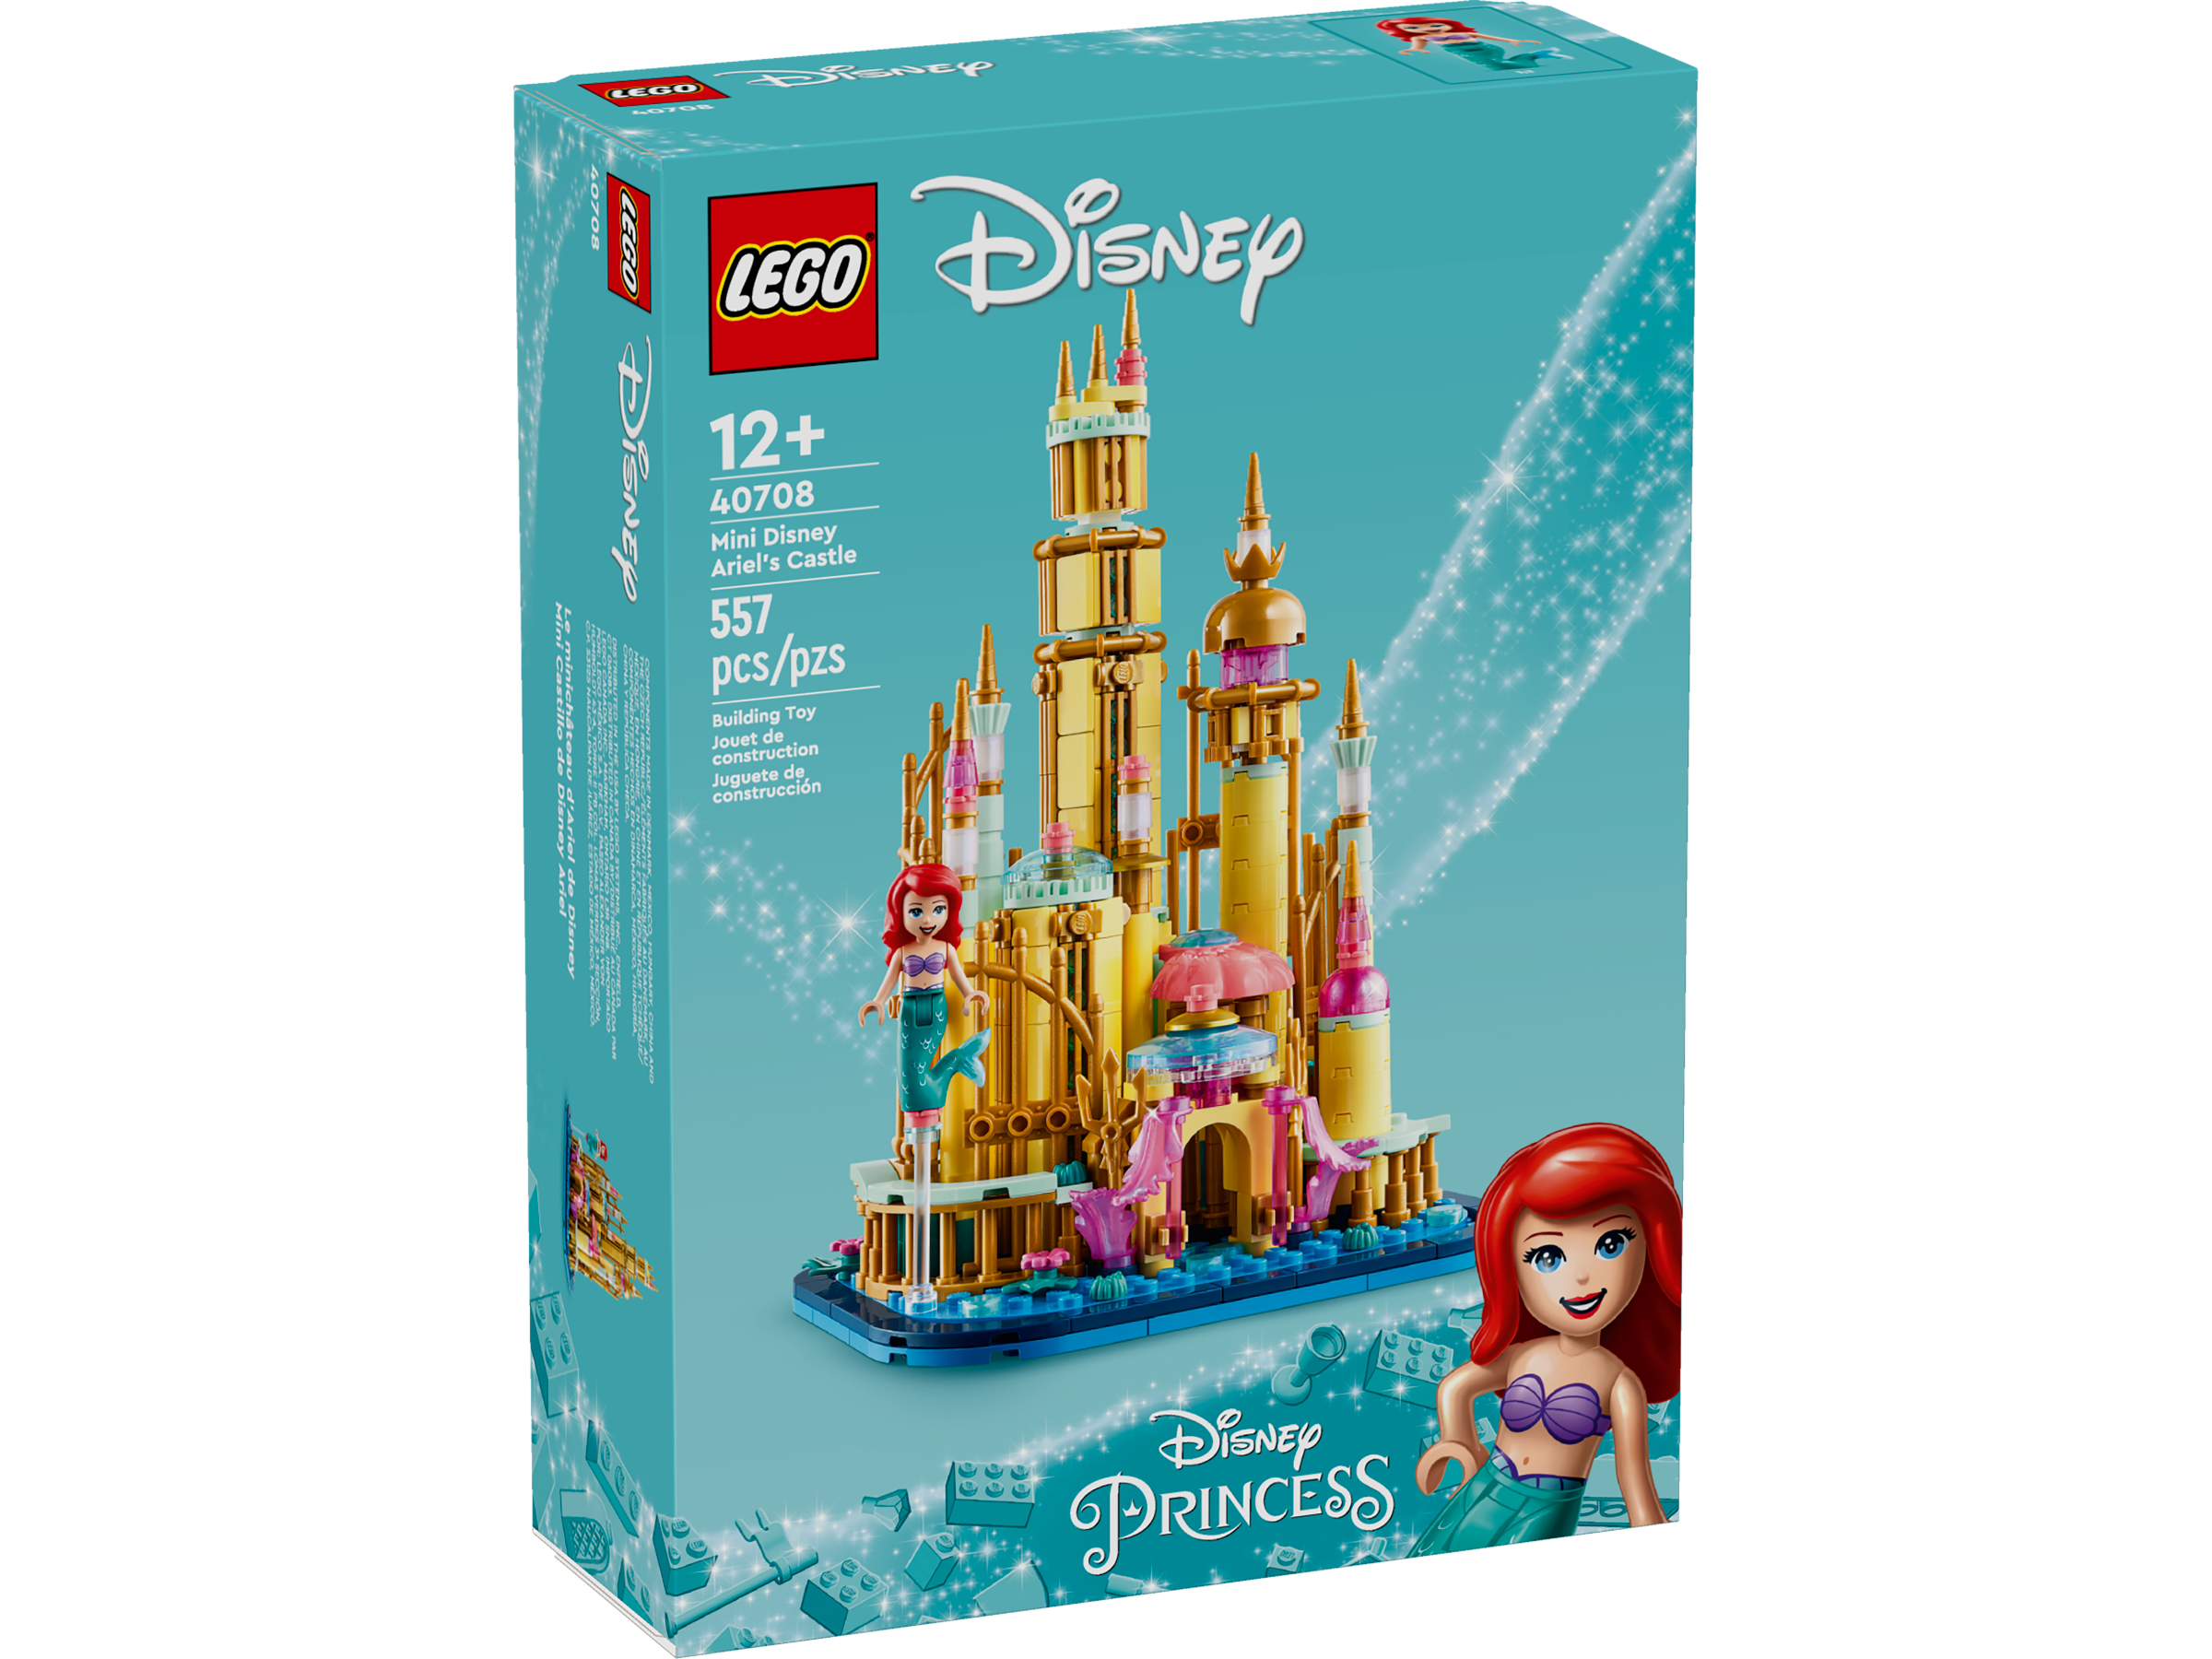 Mini Disney Ariel's Castle 40708, Disney™